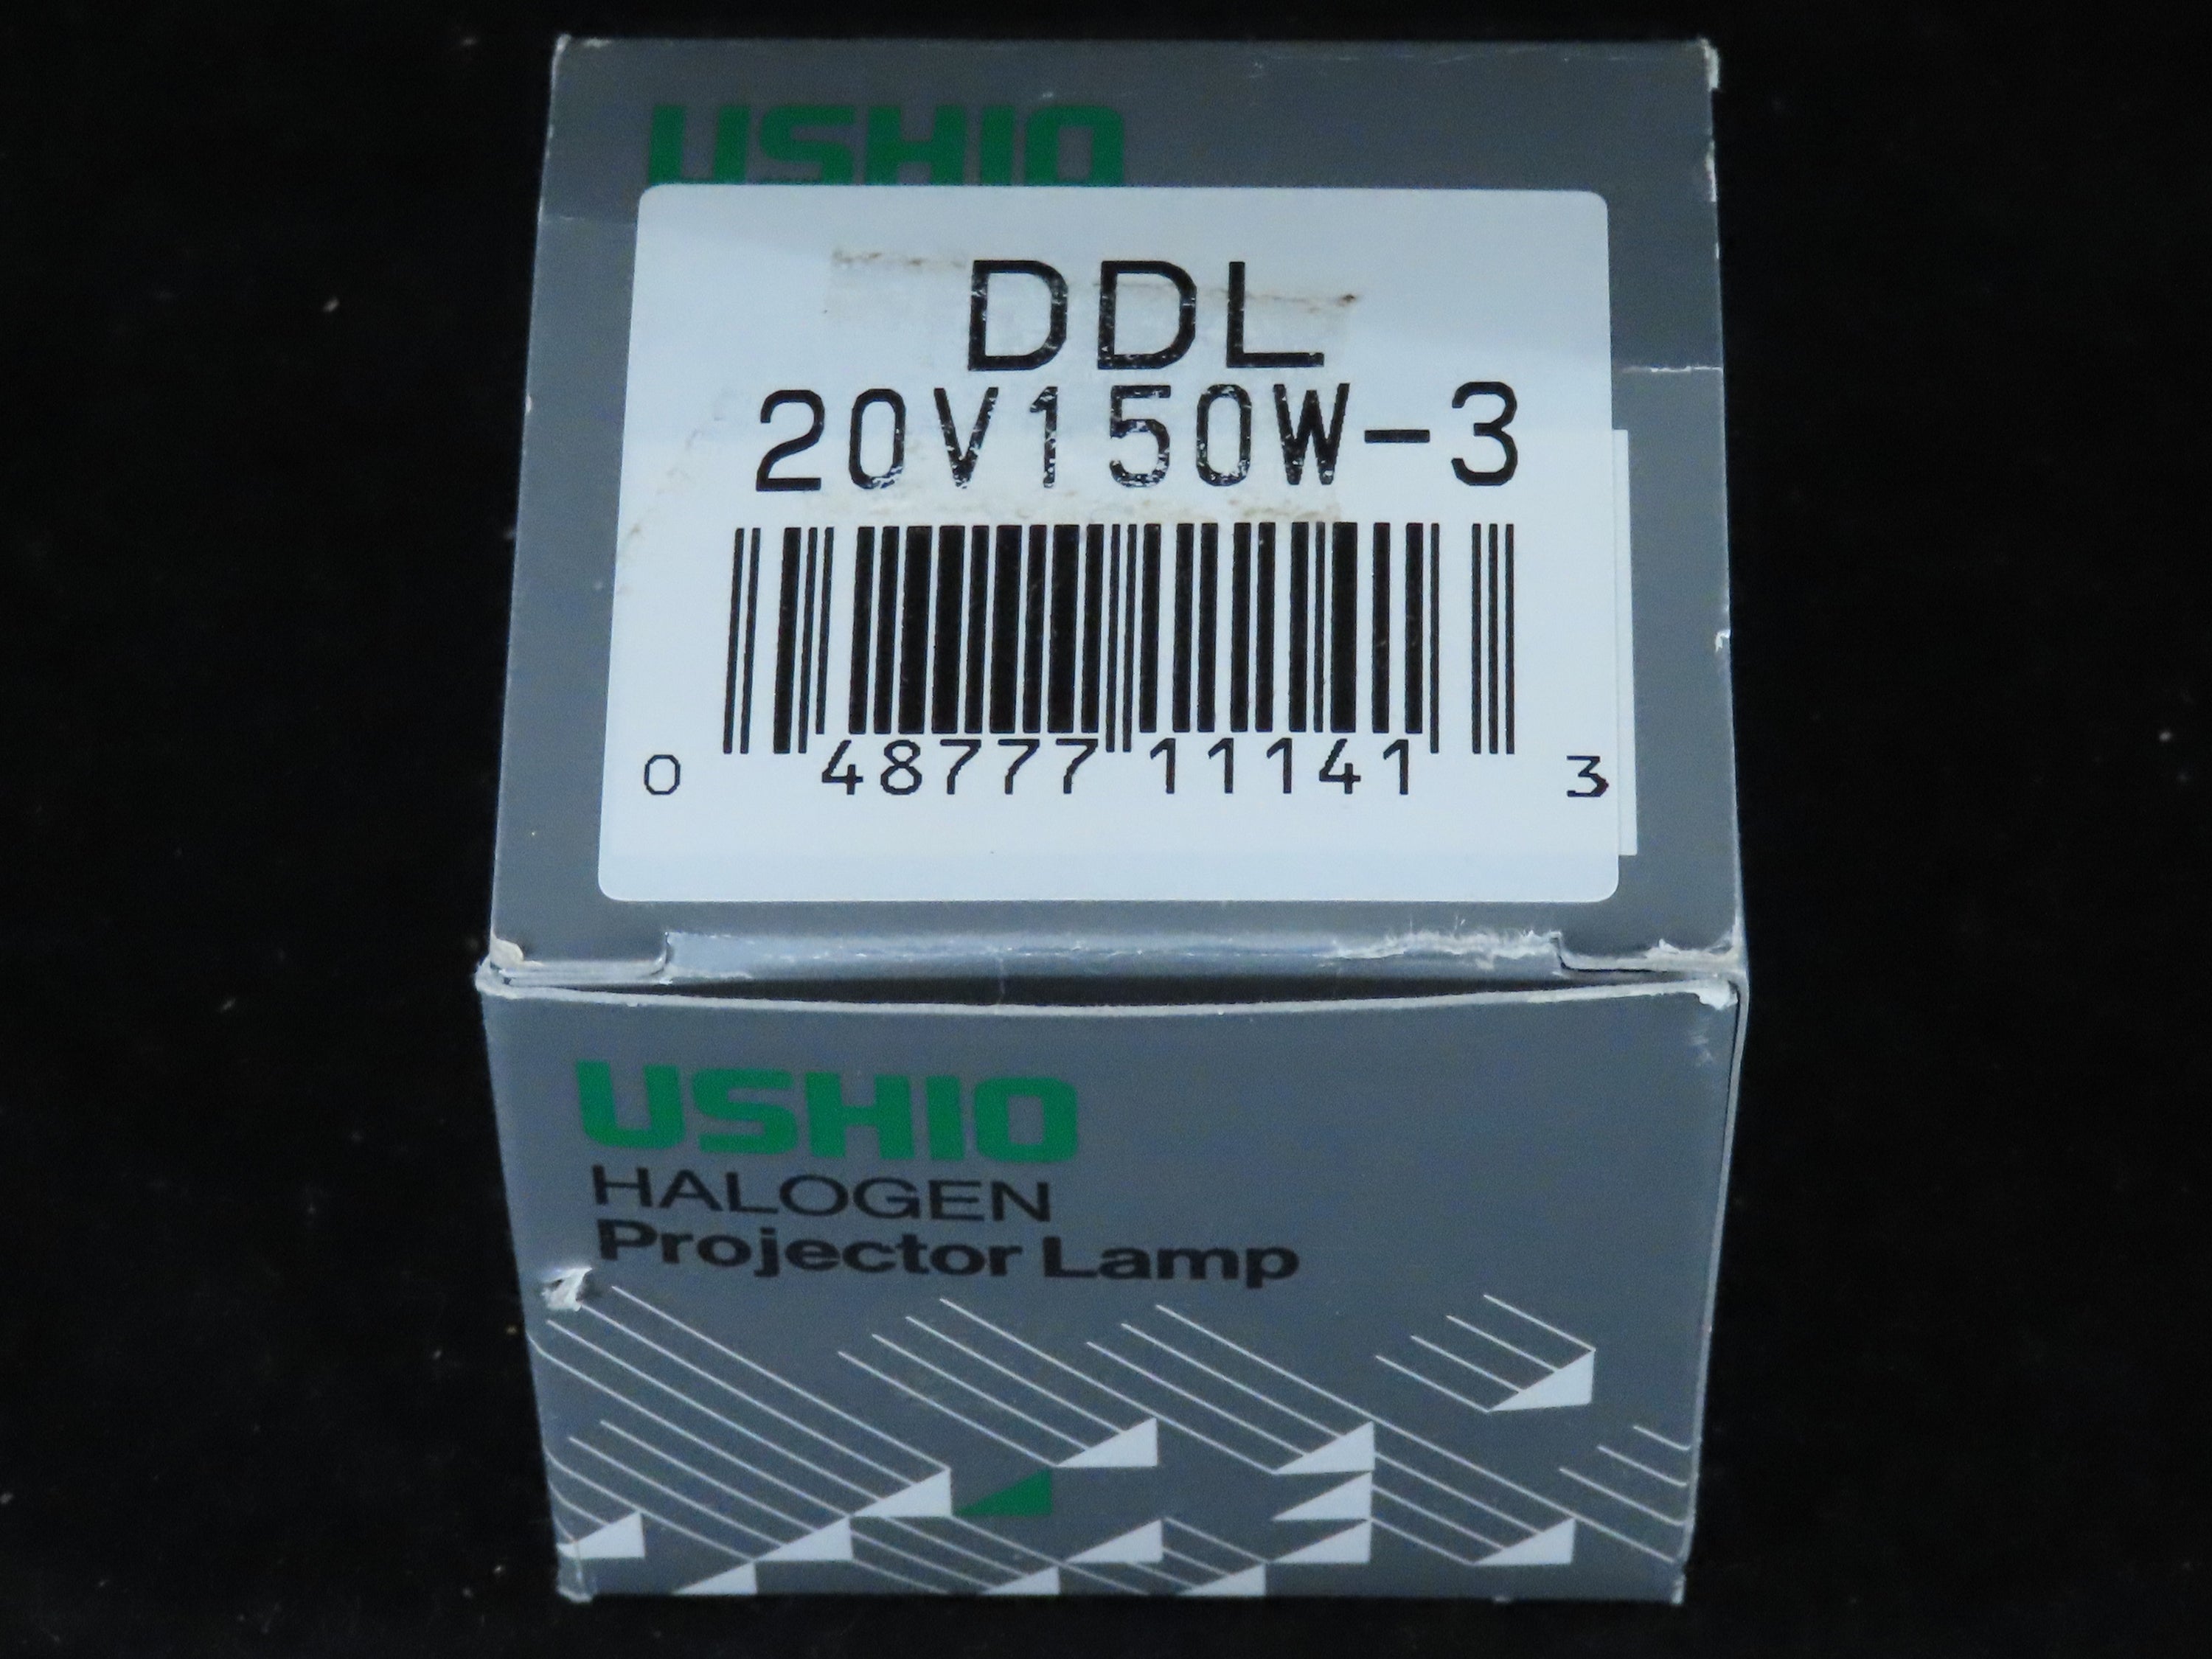 Ushio DDL Halogen Projector Lamp